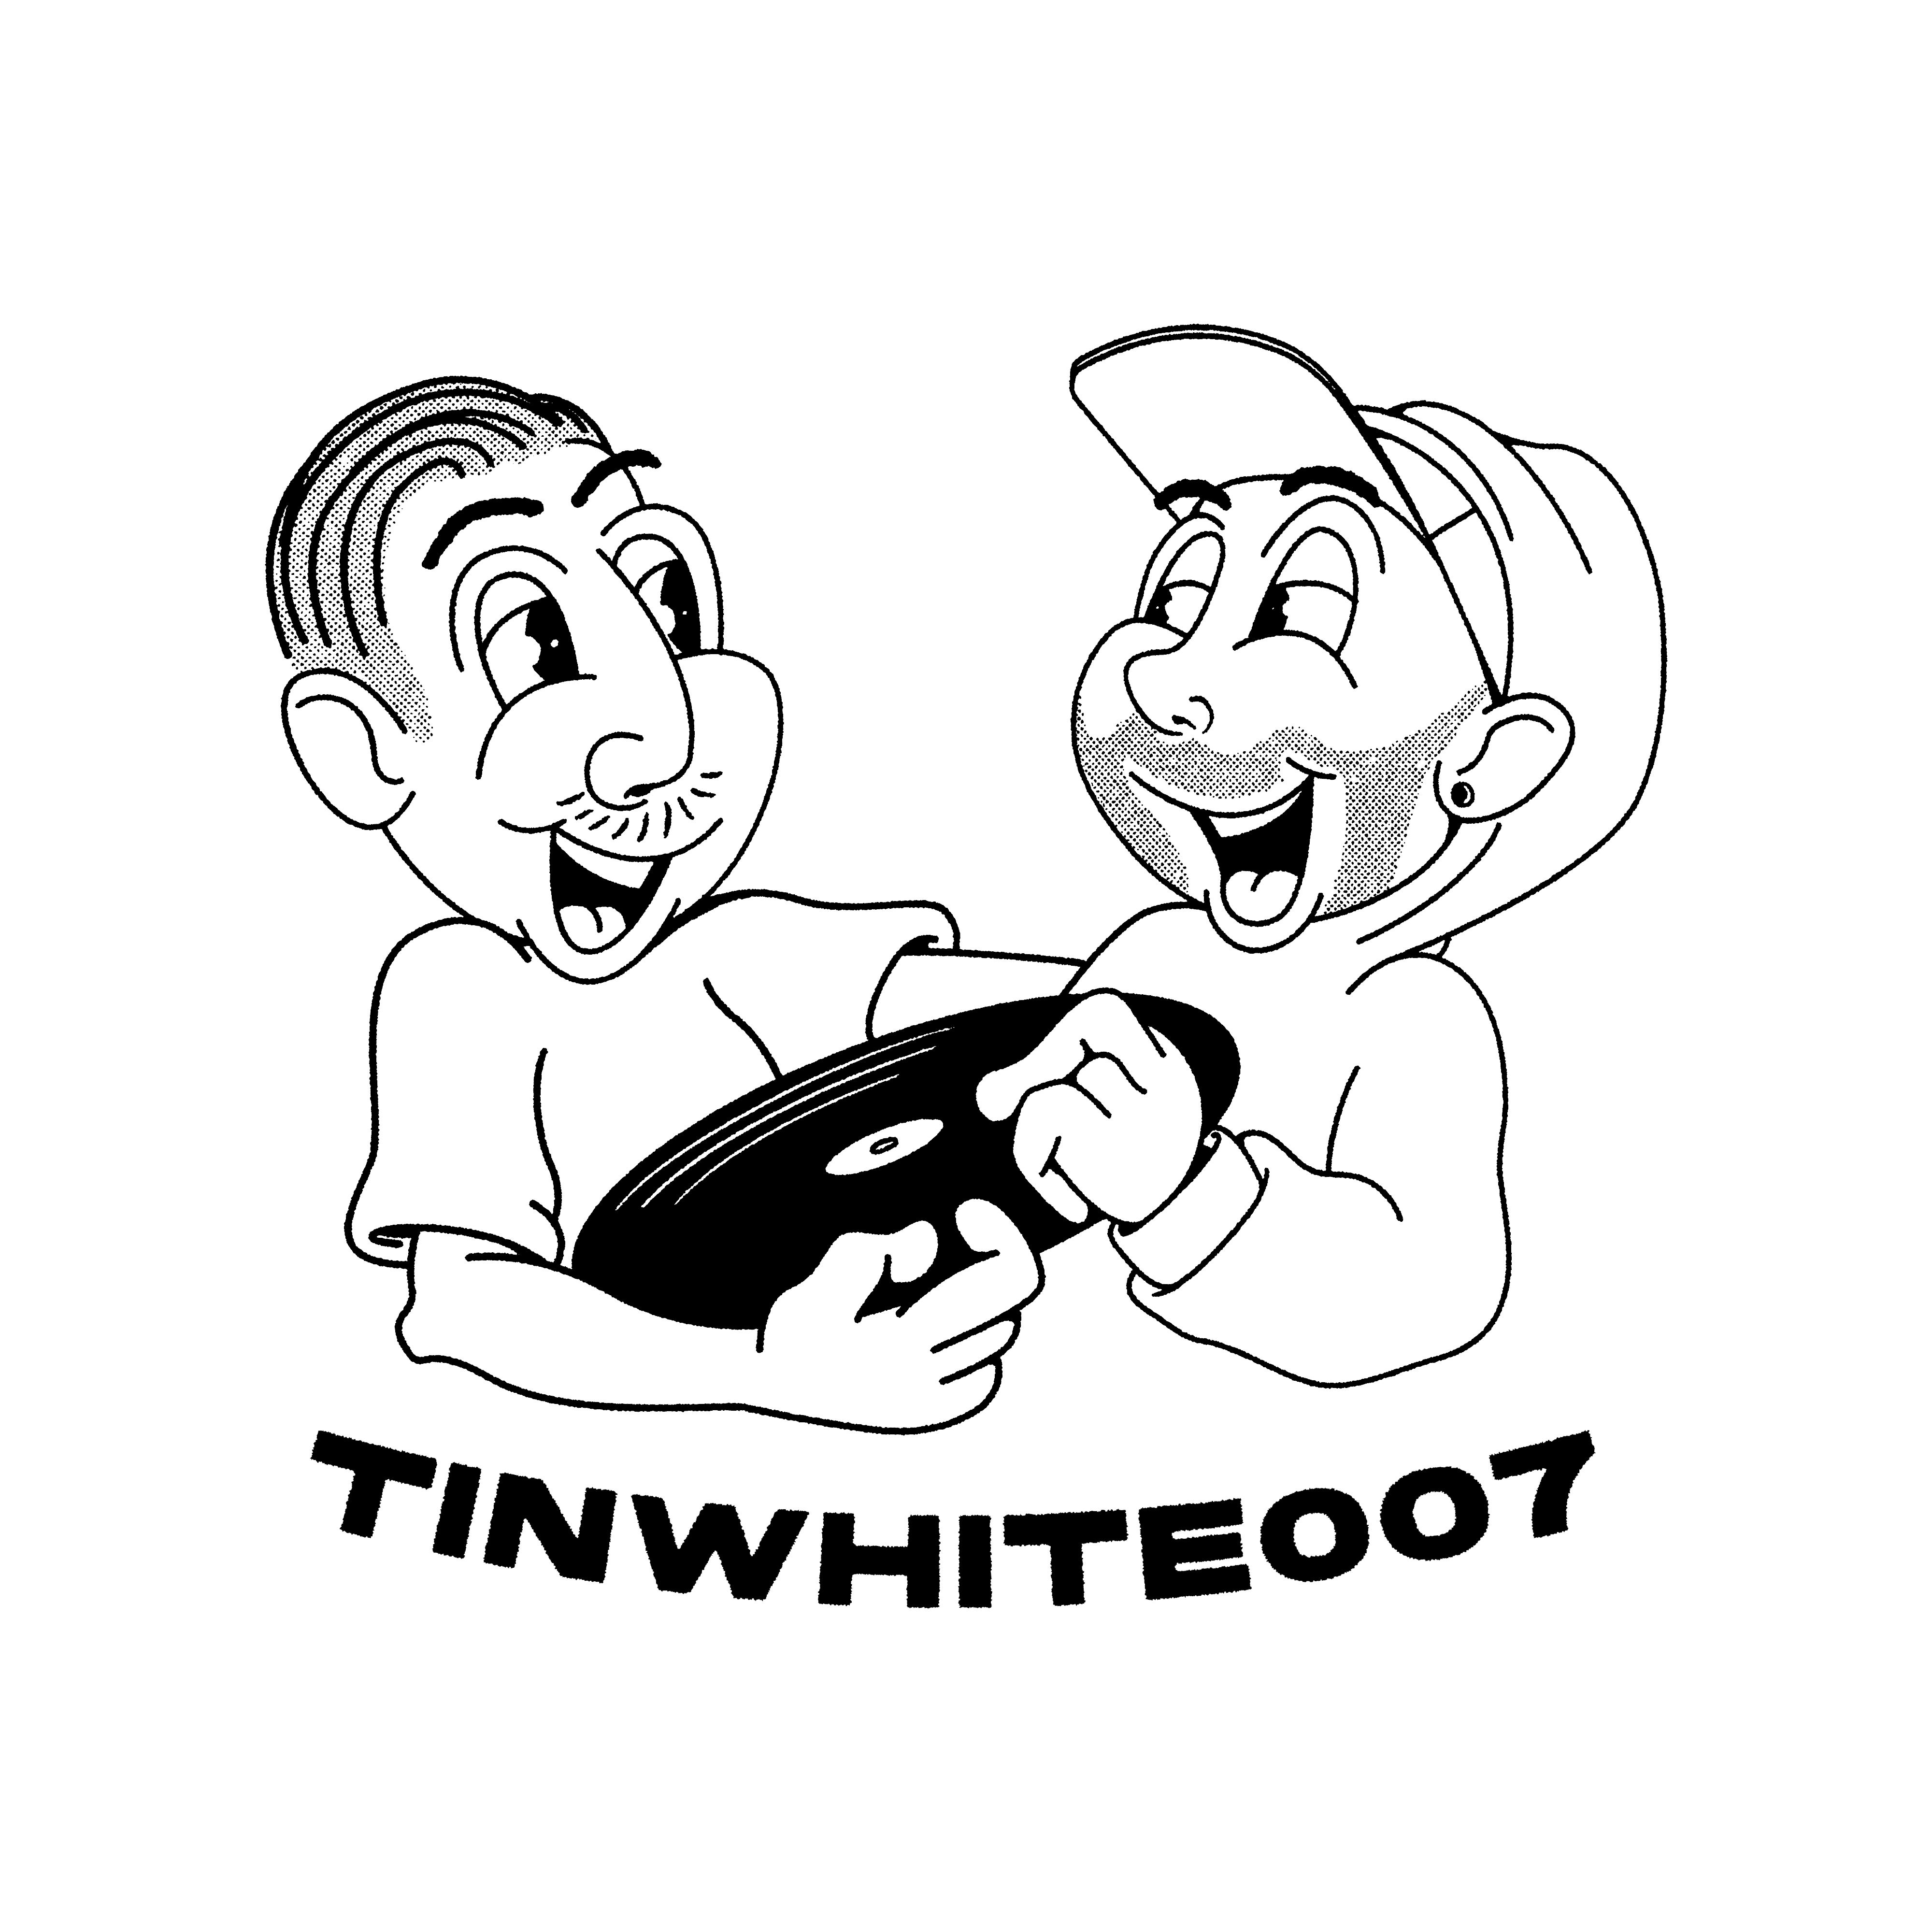 Stiahnuť ▼ TINWHITE007 // Frankel & Harper - Time Is Now White Vol.7